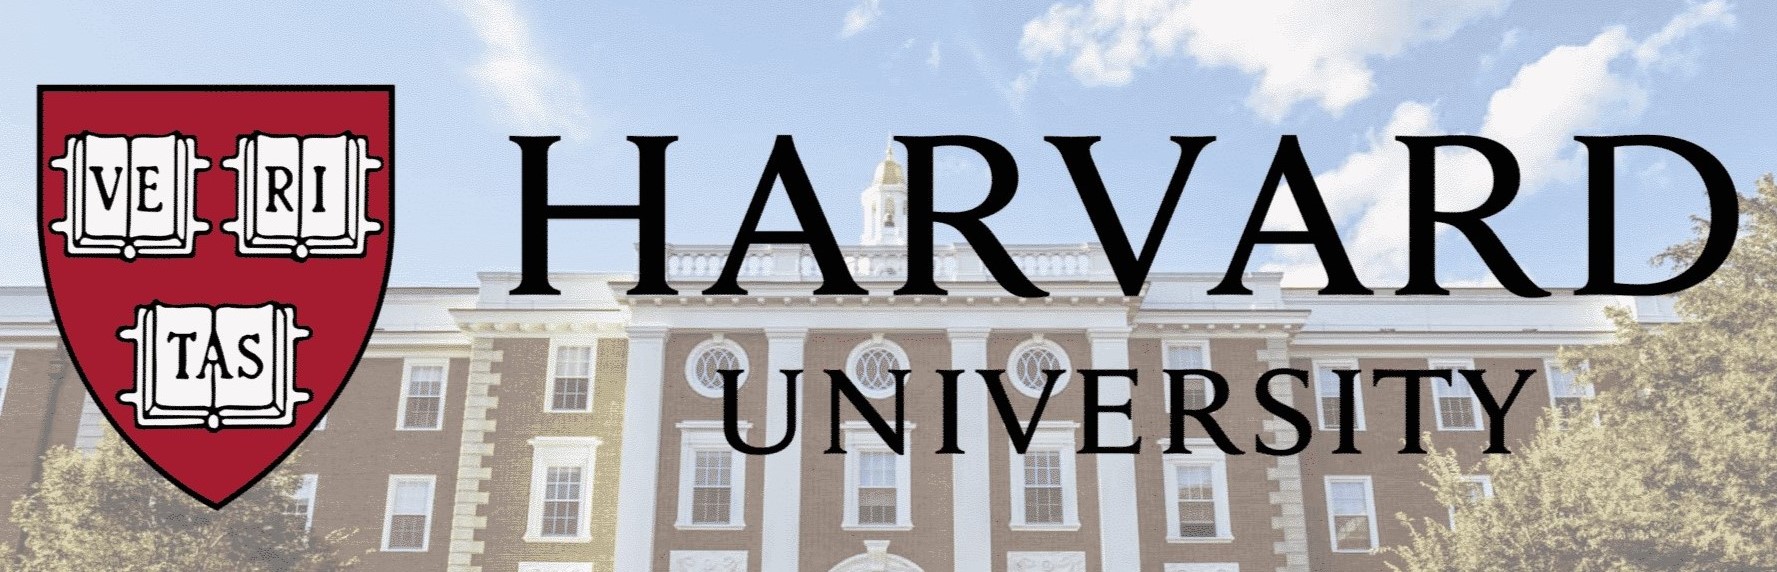 16-surprising-facts-about-harvard-university